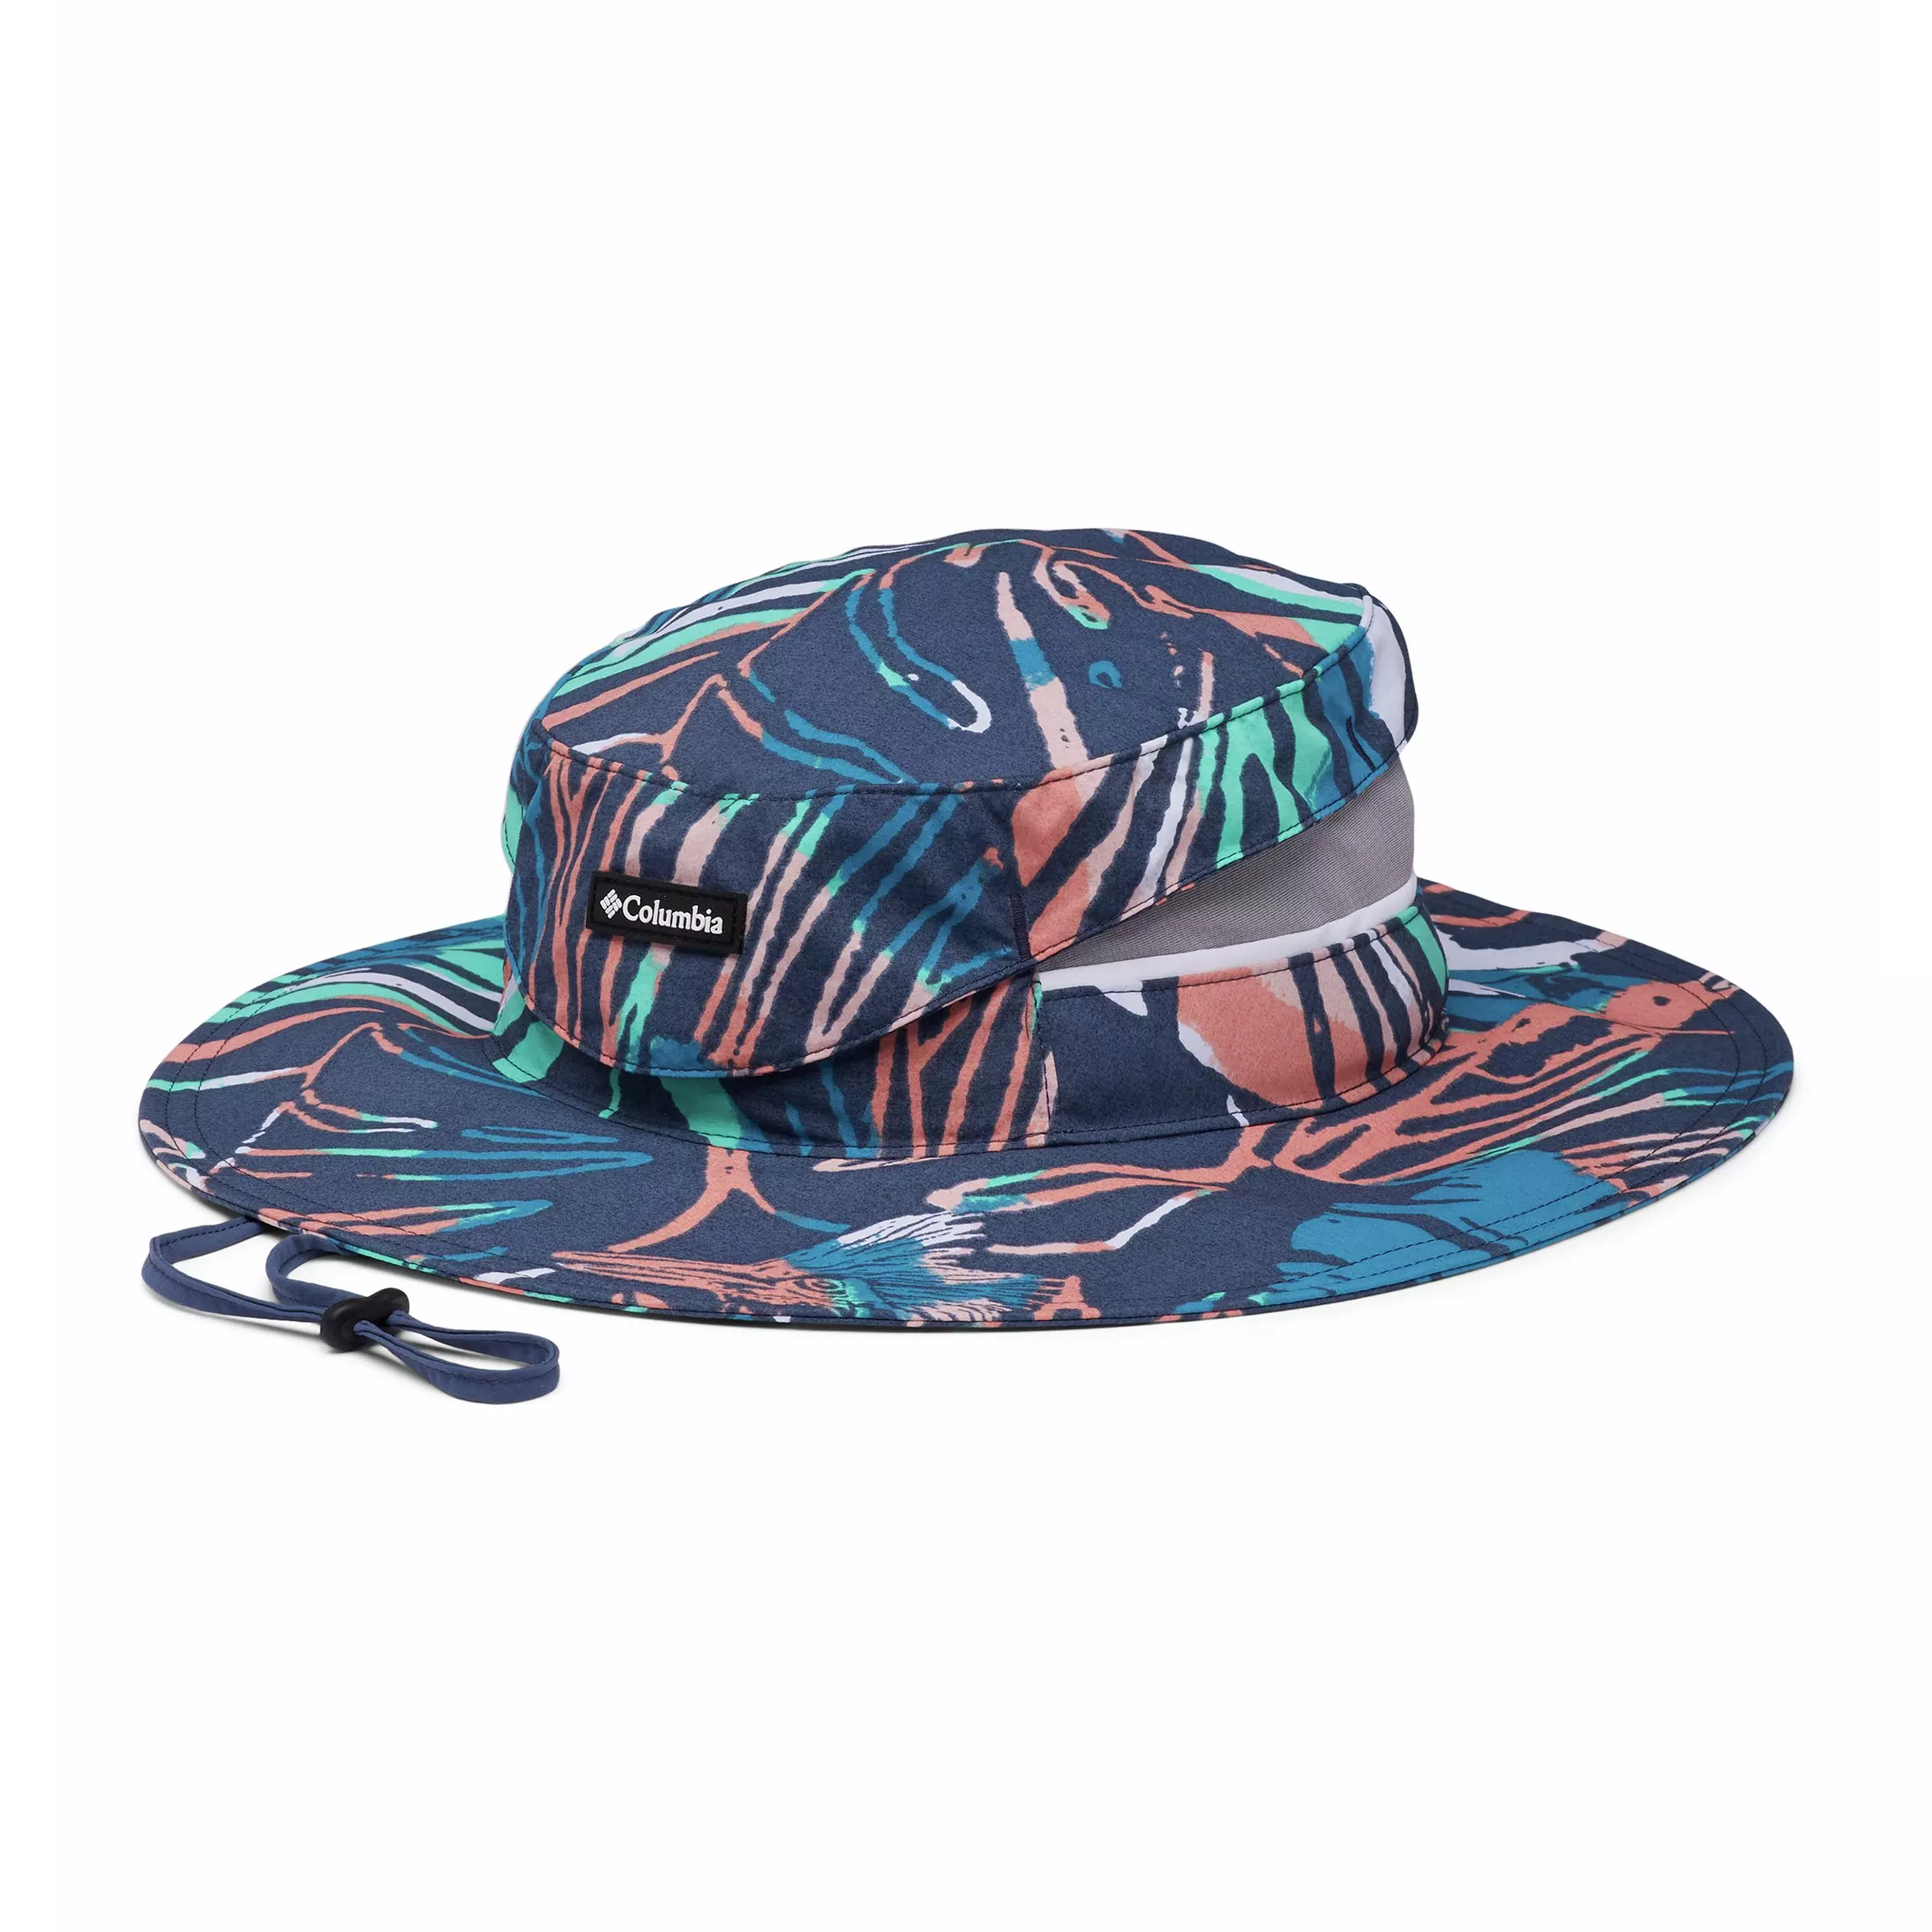 Columbia Bora Bora Printed Boonie Hat - Blue